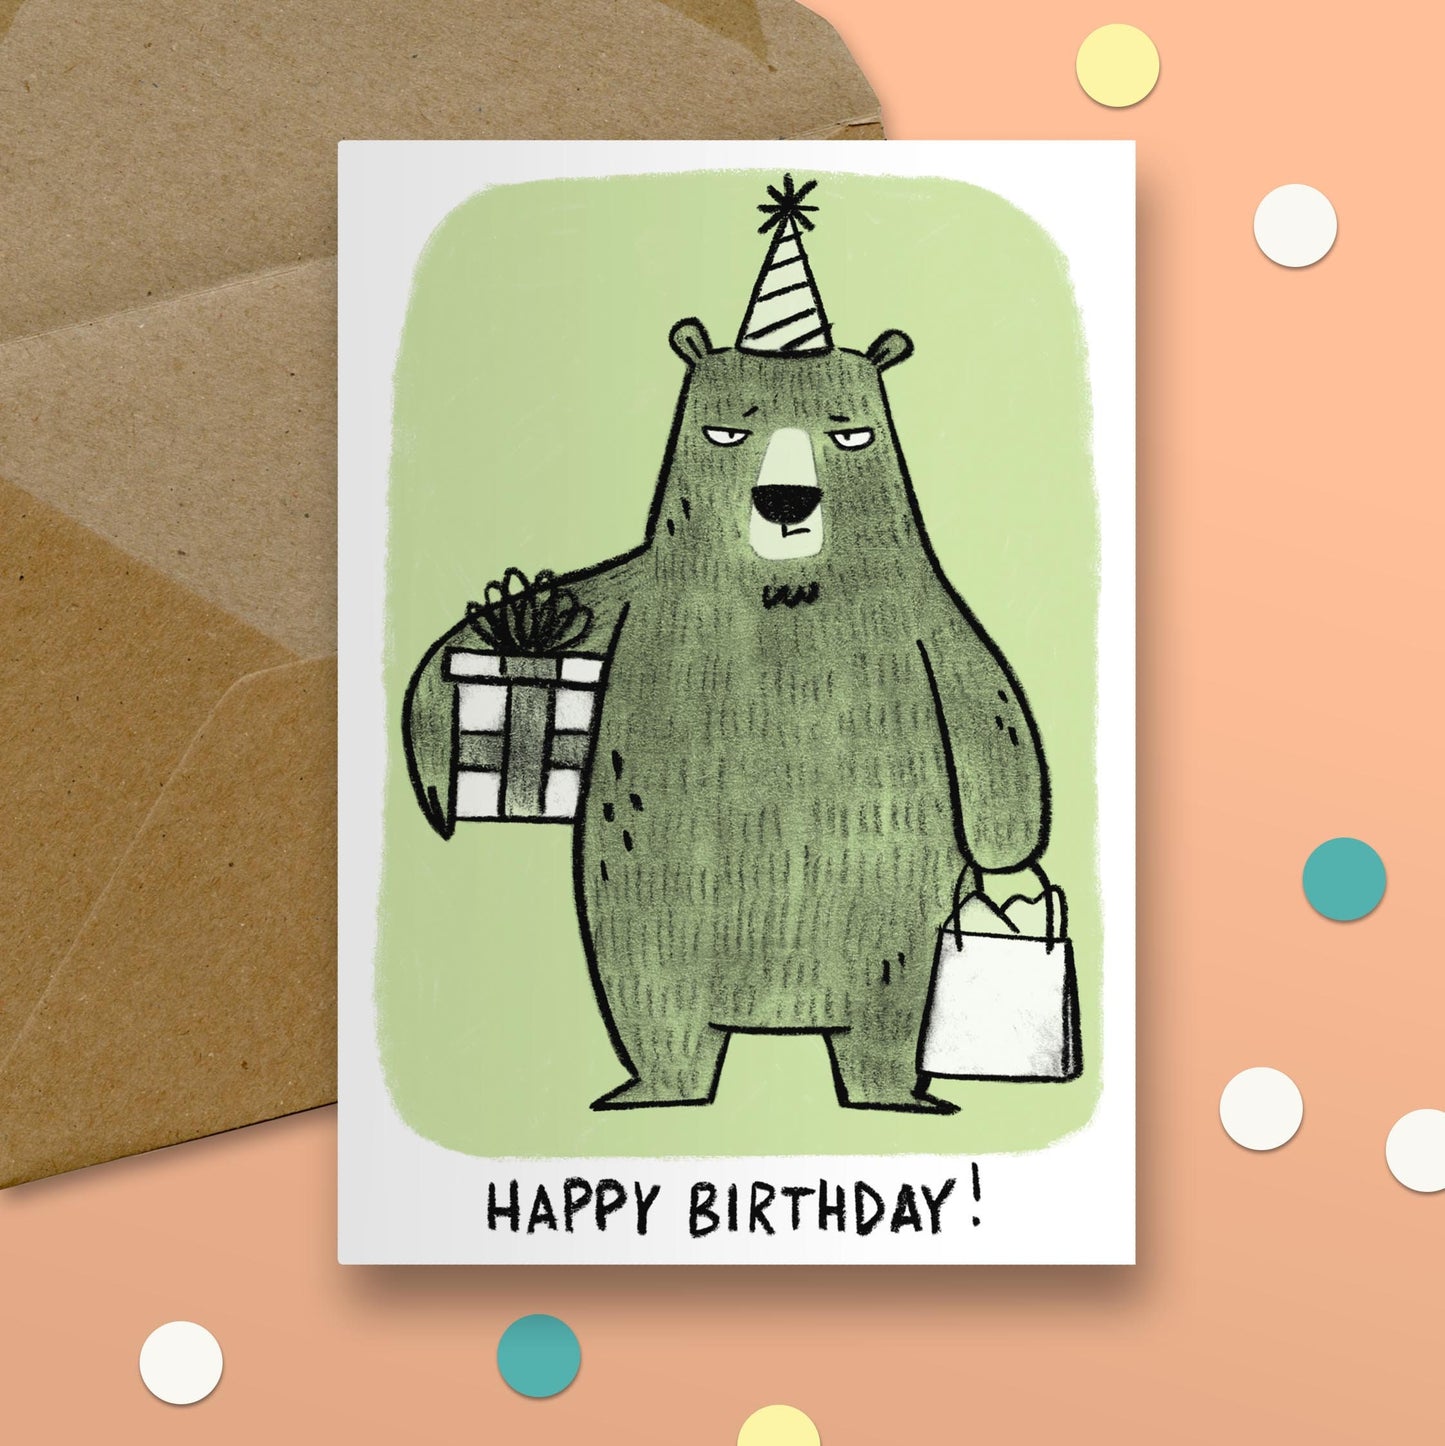 Happy Birthday Bear Card